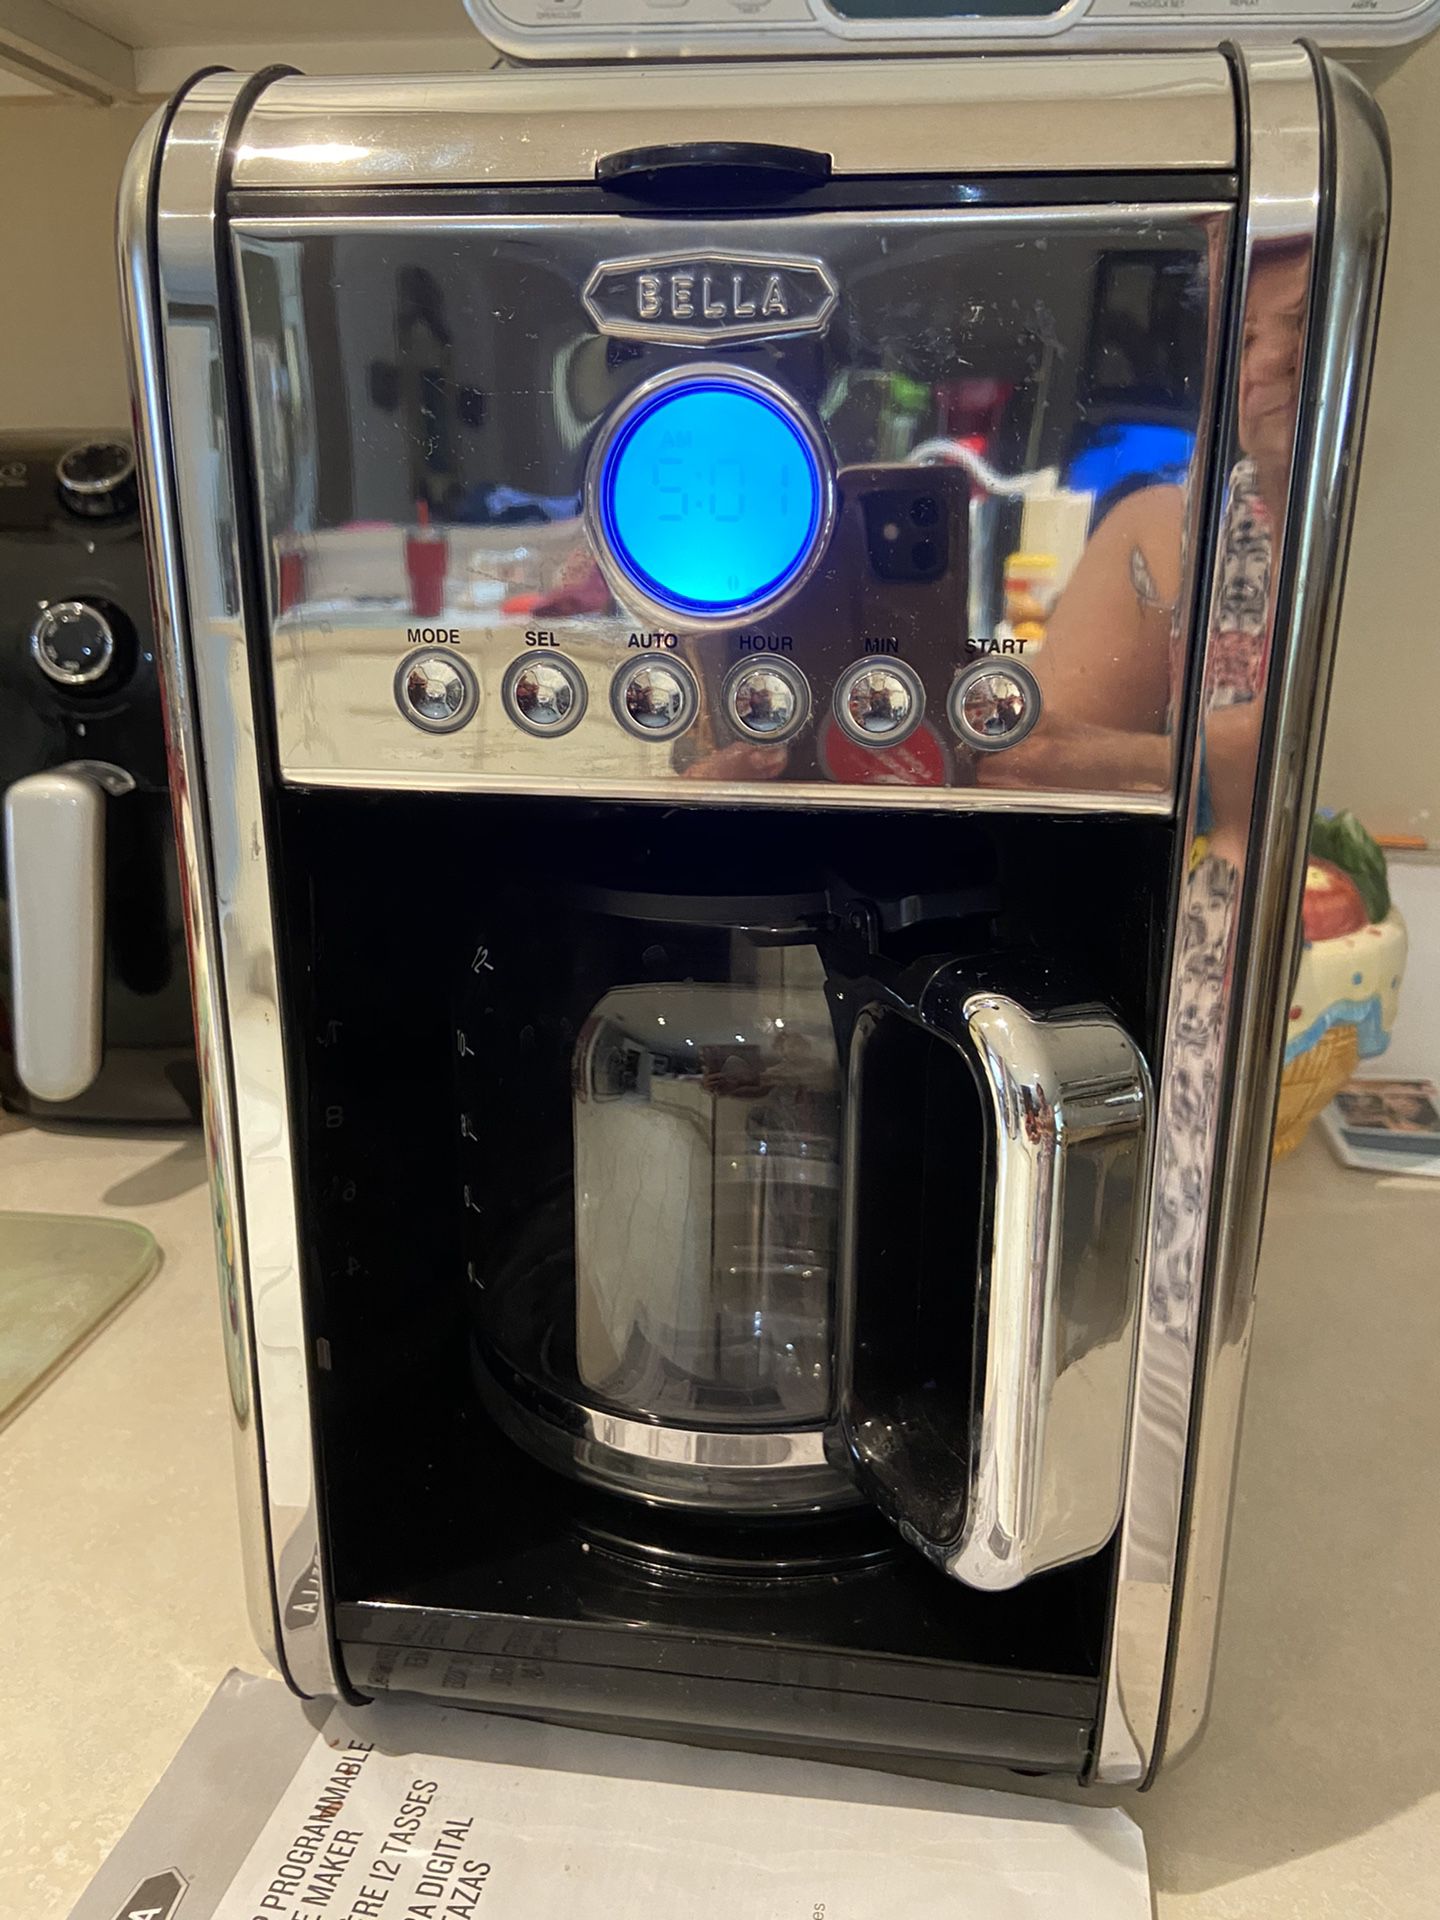 BELLA 12 Cup Programmable Coffee Maker